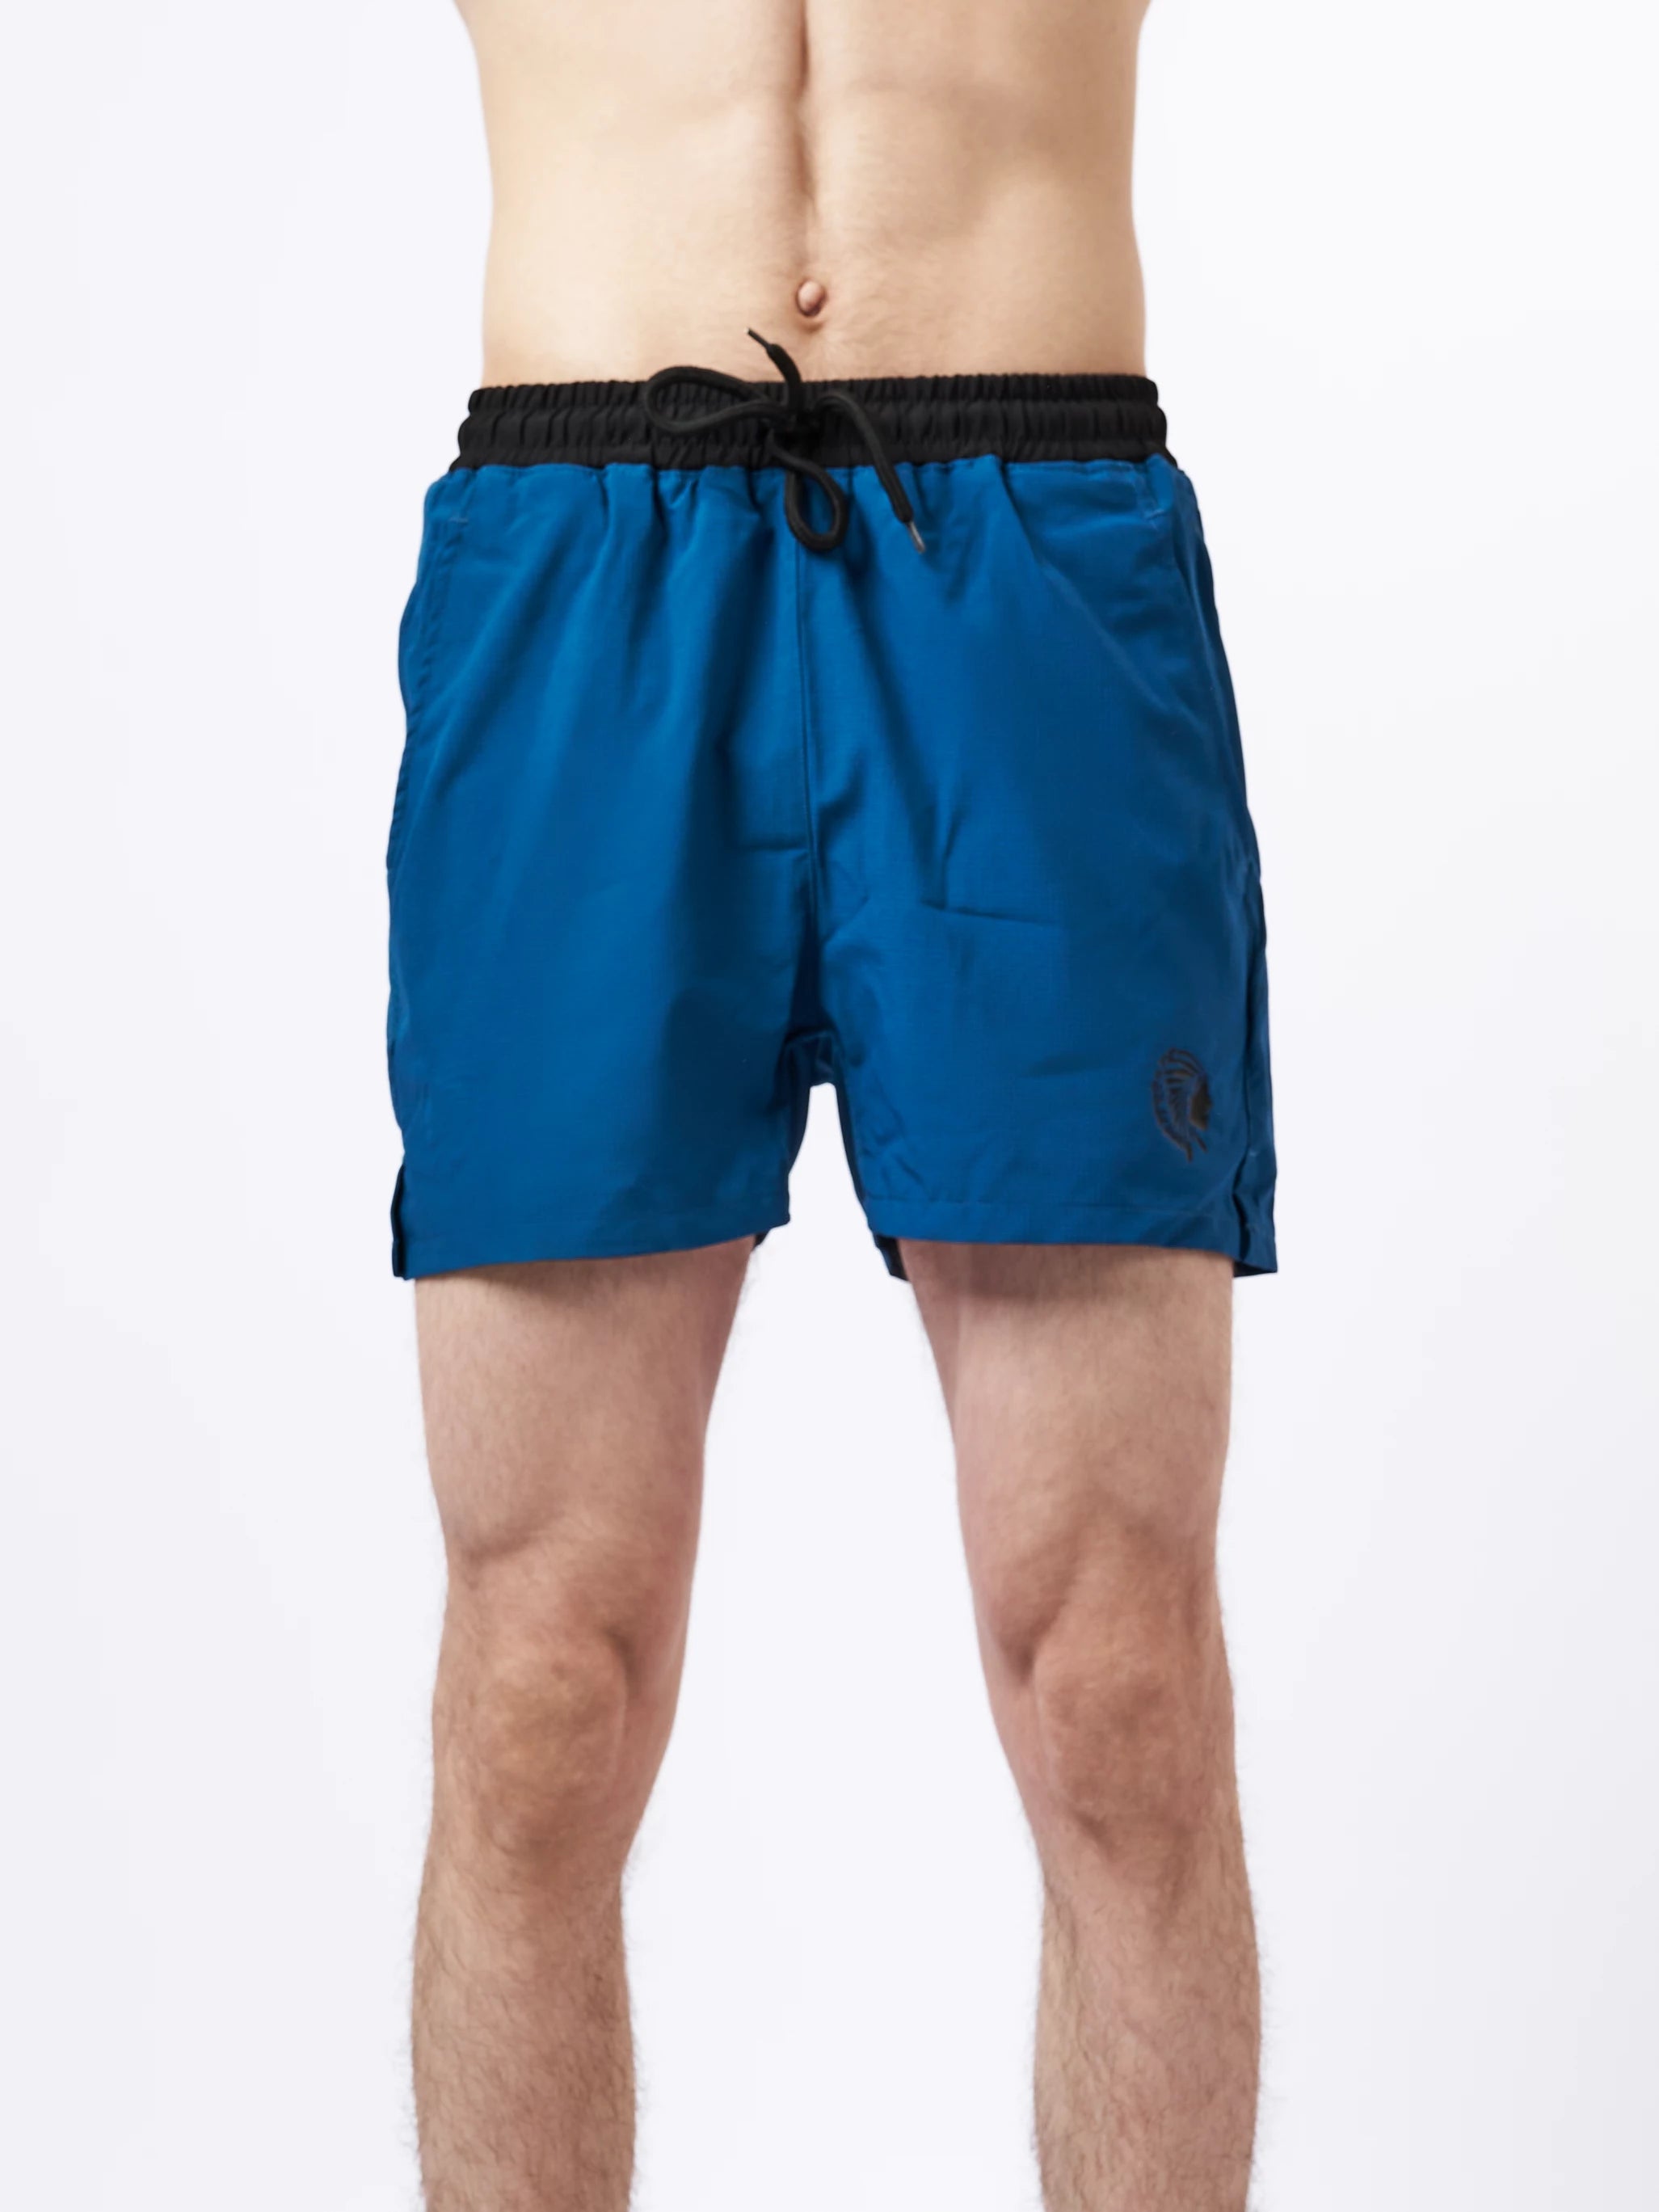 Men's Shorts Blue